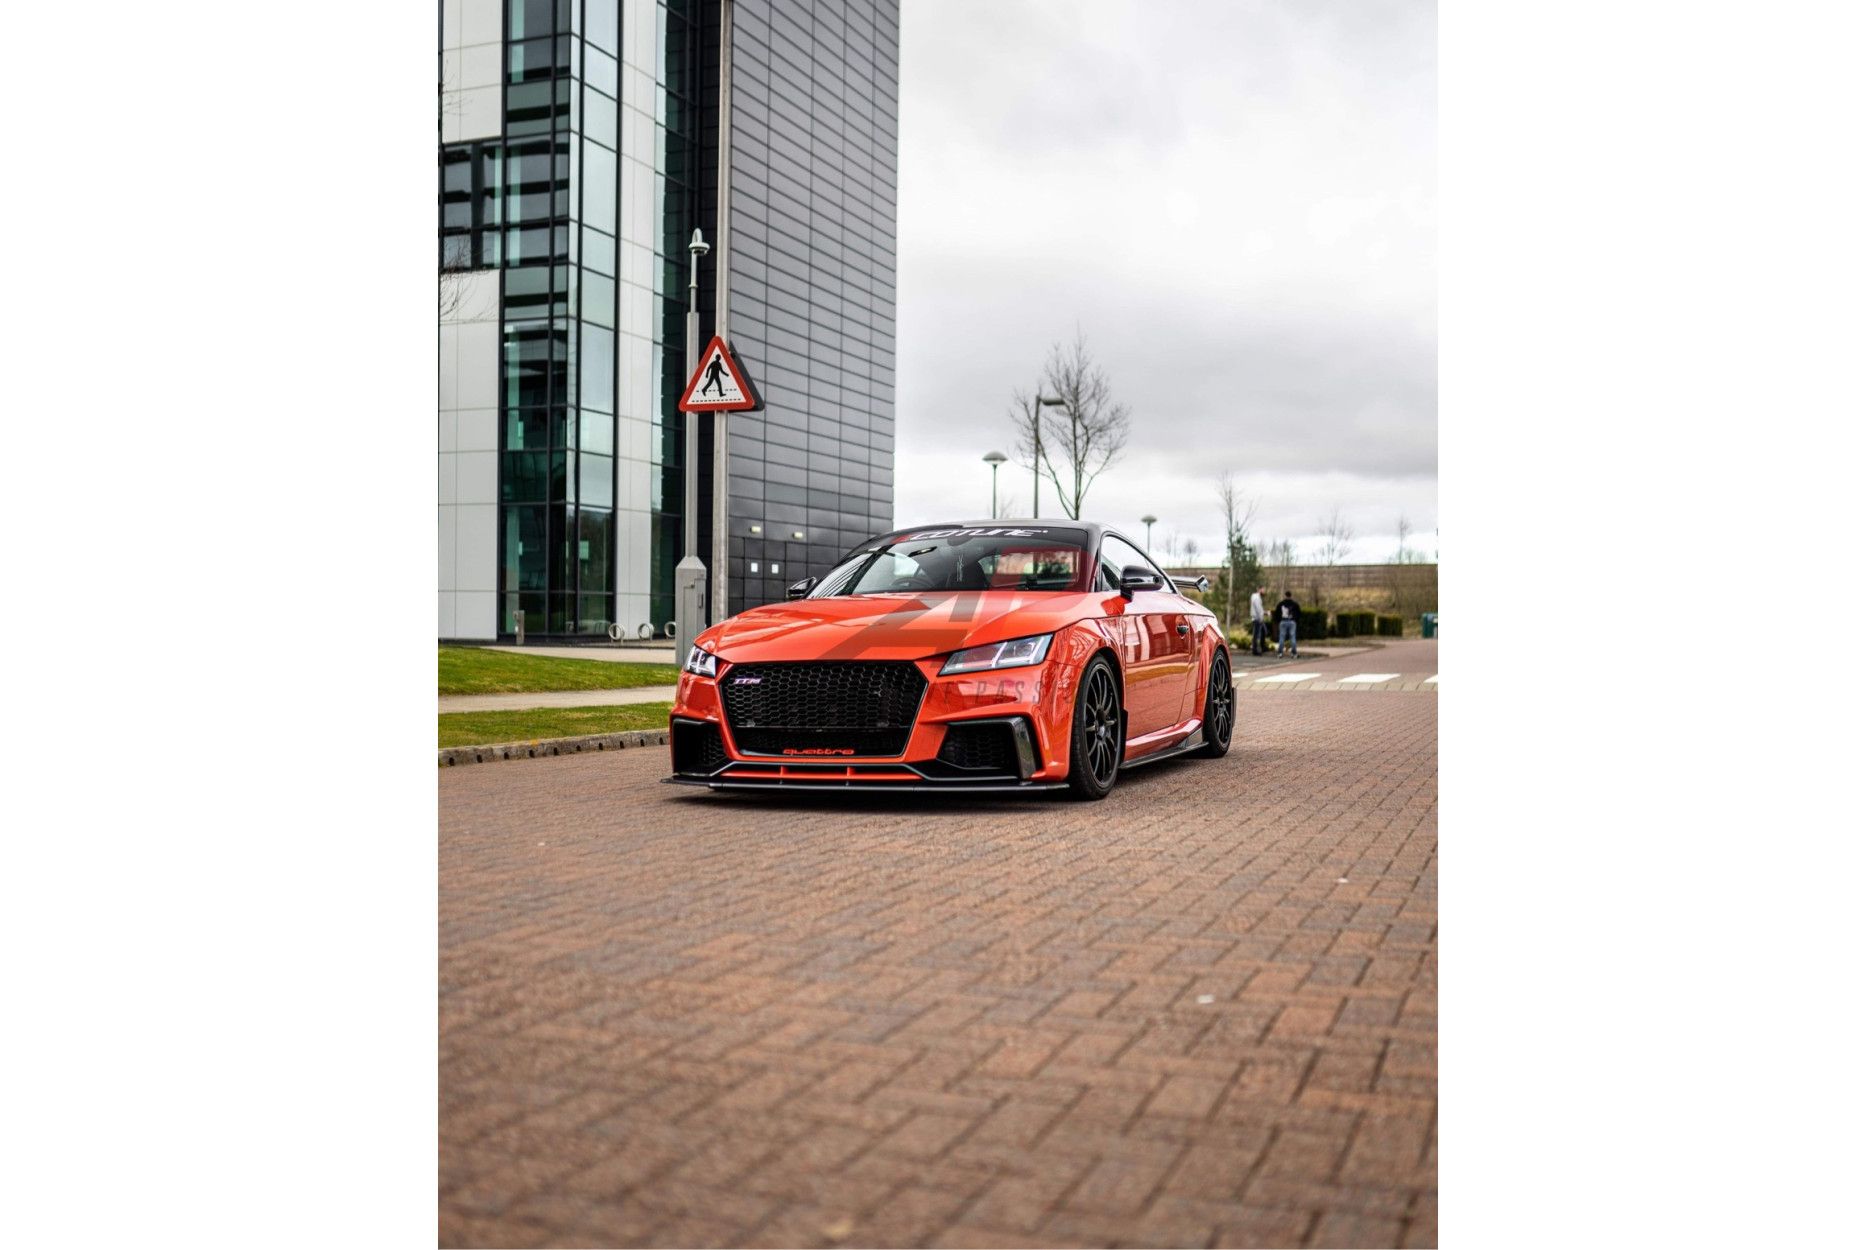 Automotive Passion Versteifungsstrebe Kofferraum/Rückbank für Audi 8S  TT/TTS/TTRS - online kaufen bei CFD